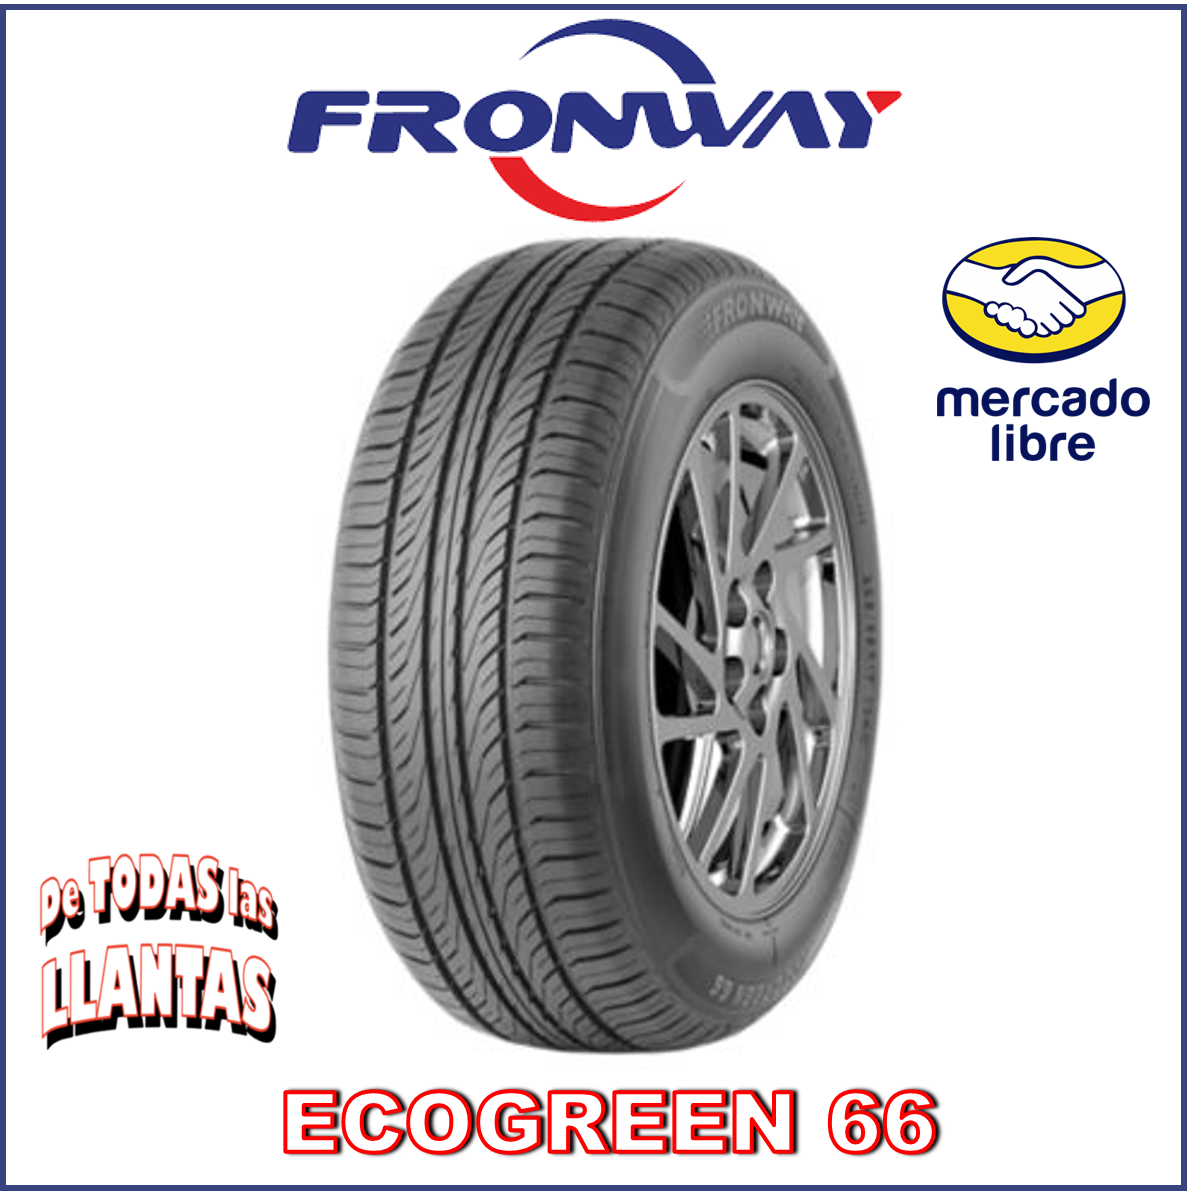 "Llanta Fronway EcoGreen 66 185/70R13"